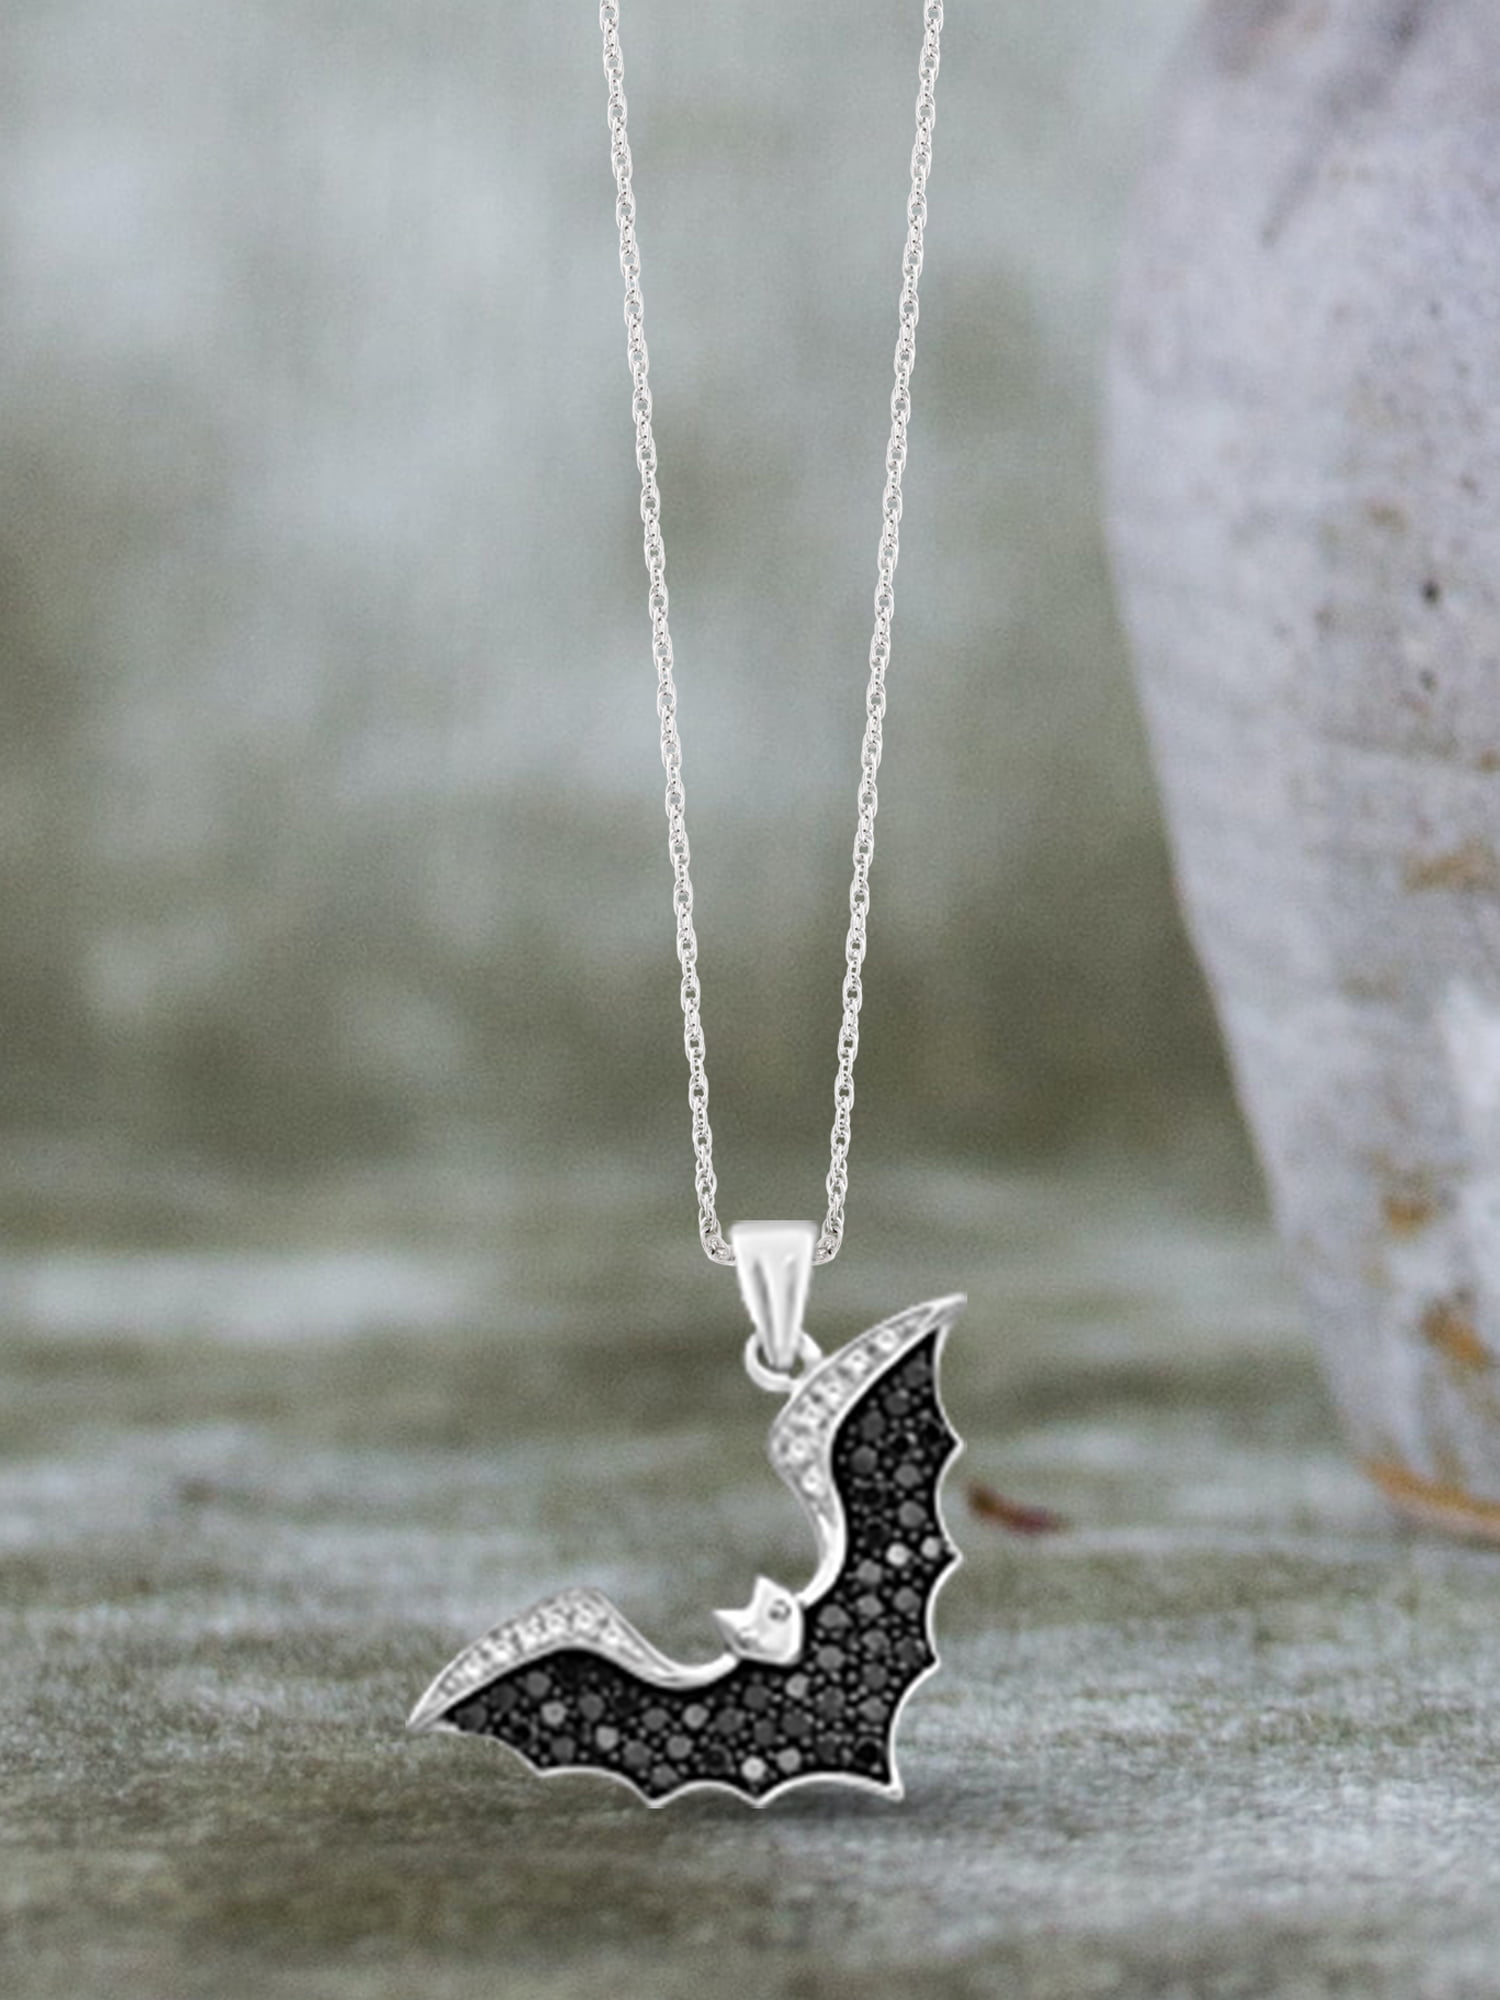 Amazon.com: Sterling Silver Petite Hanging Bat Charm Pendant Necklace, 16